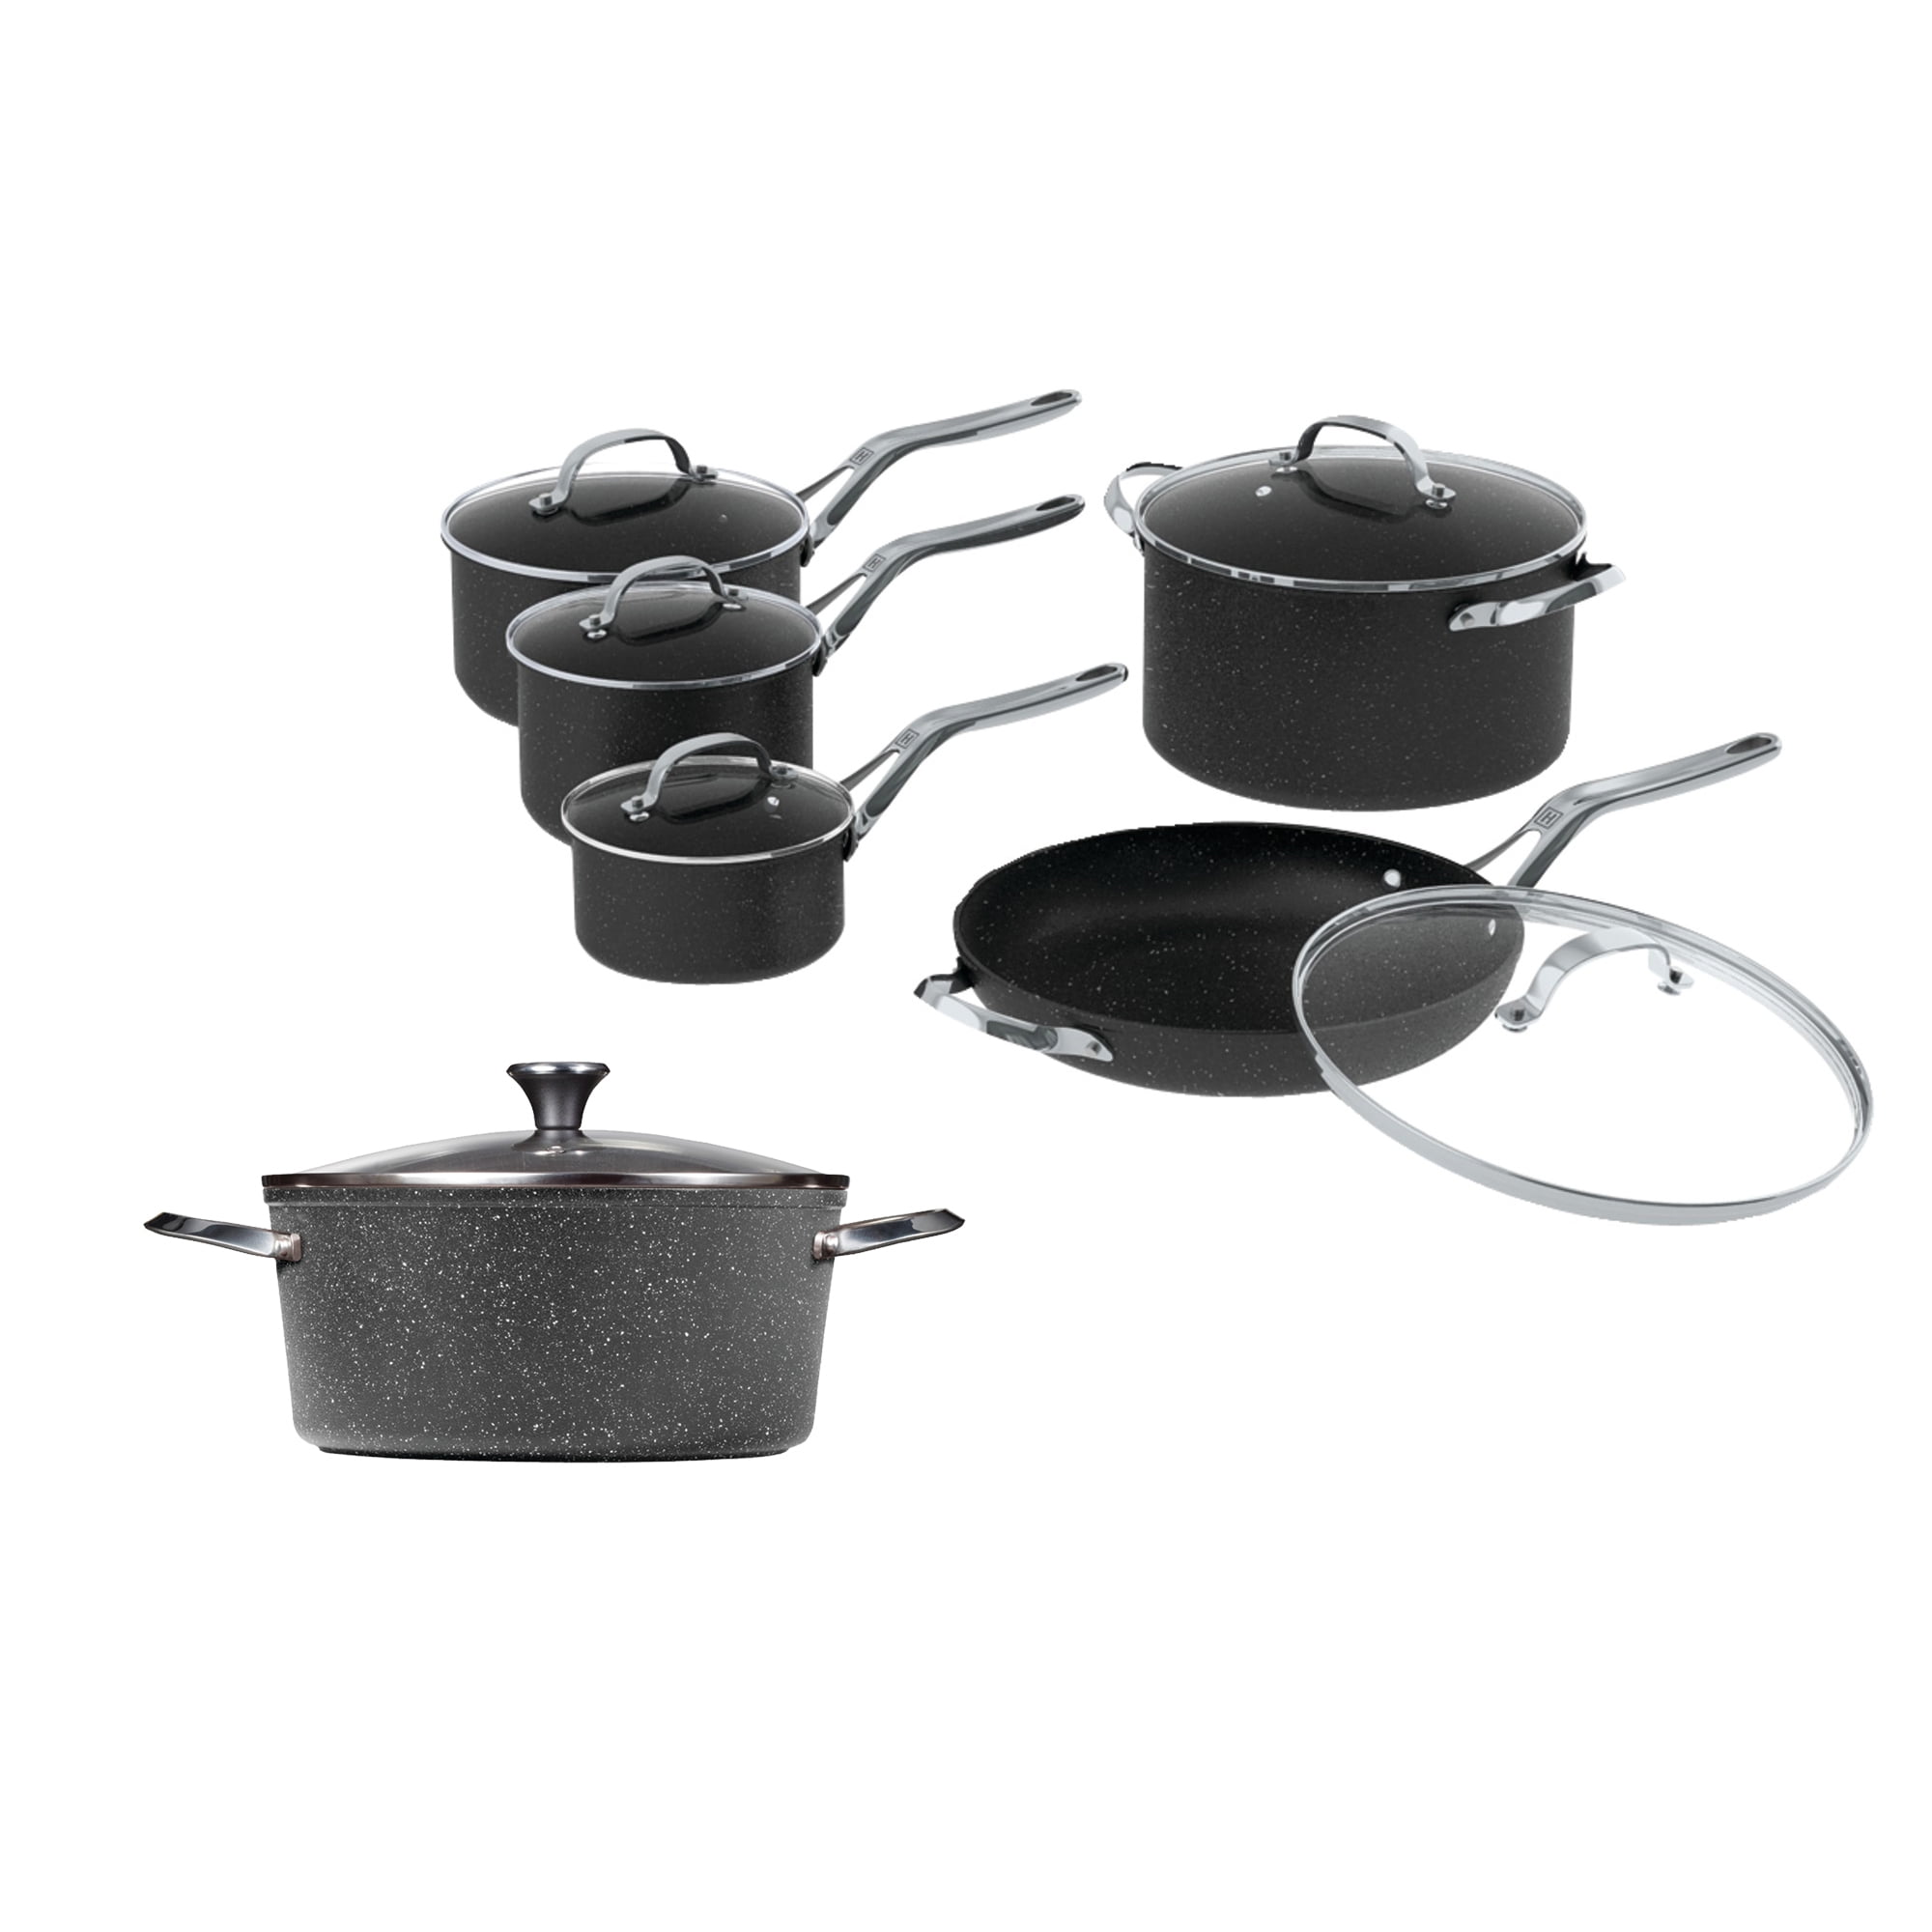 Starfrit The Rock 8-Piece Cookware Set with Bakelite Handles Black for sale online 